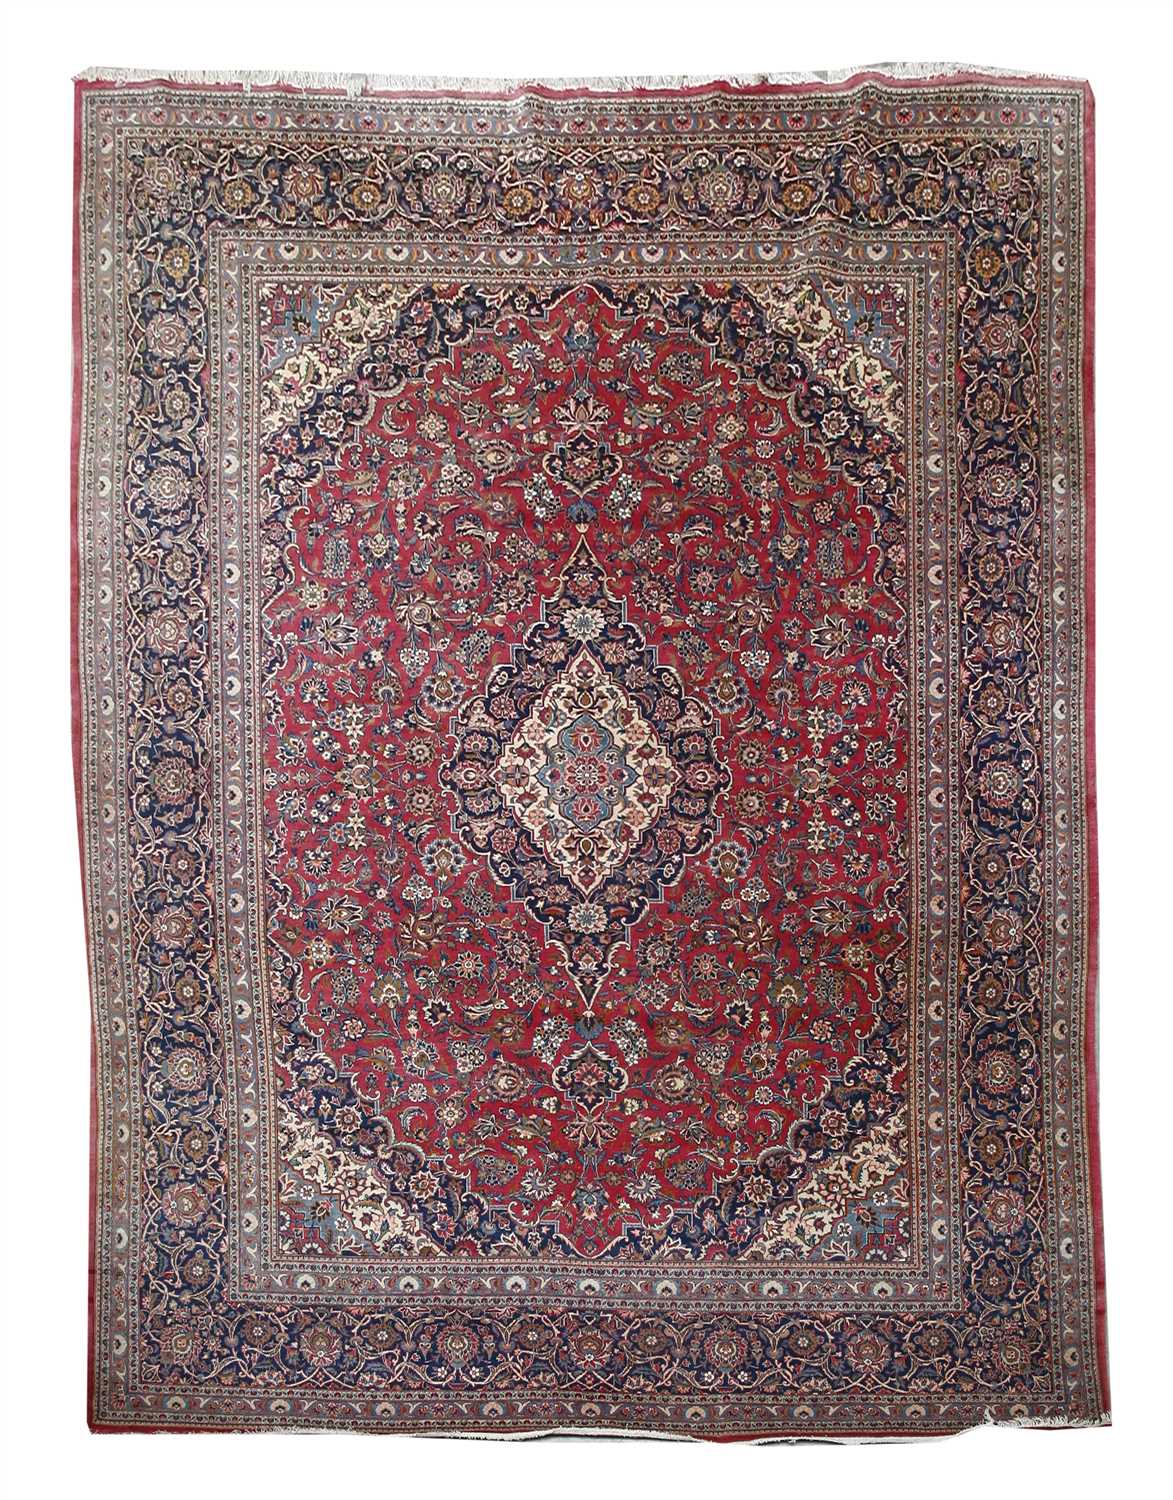 Lot 217 - A Kashan carpet